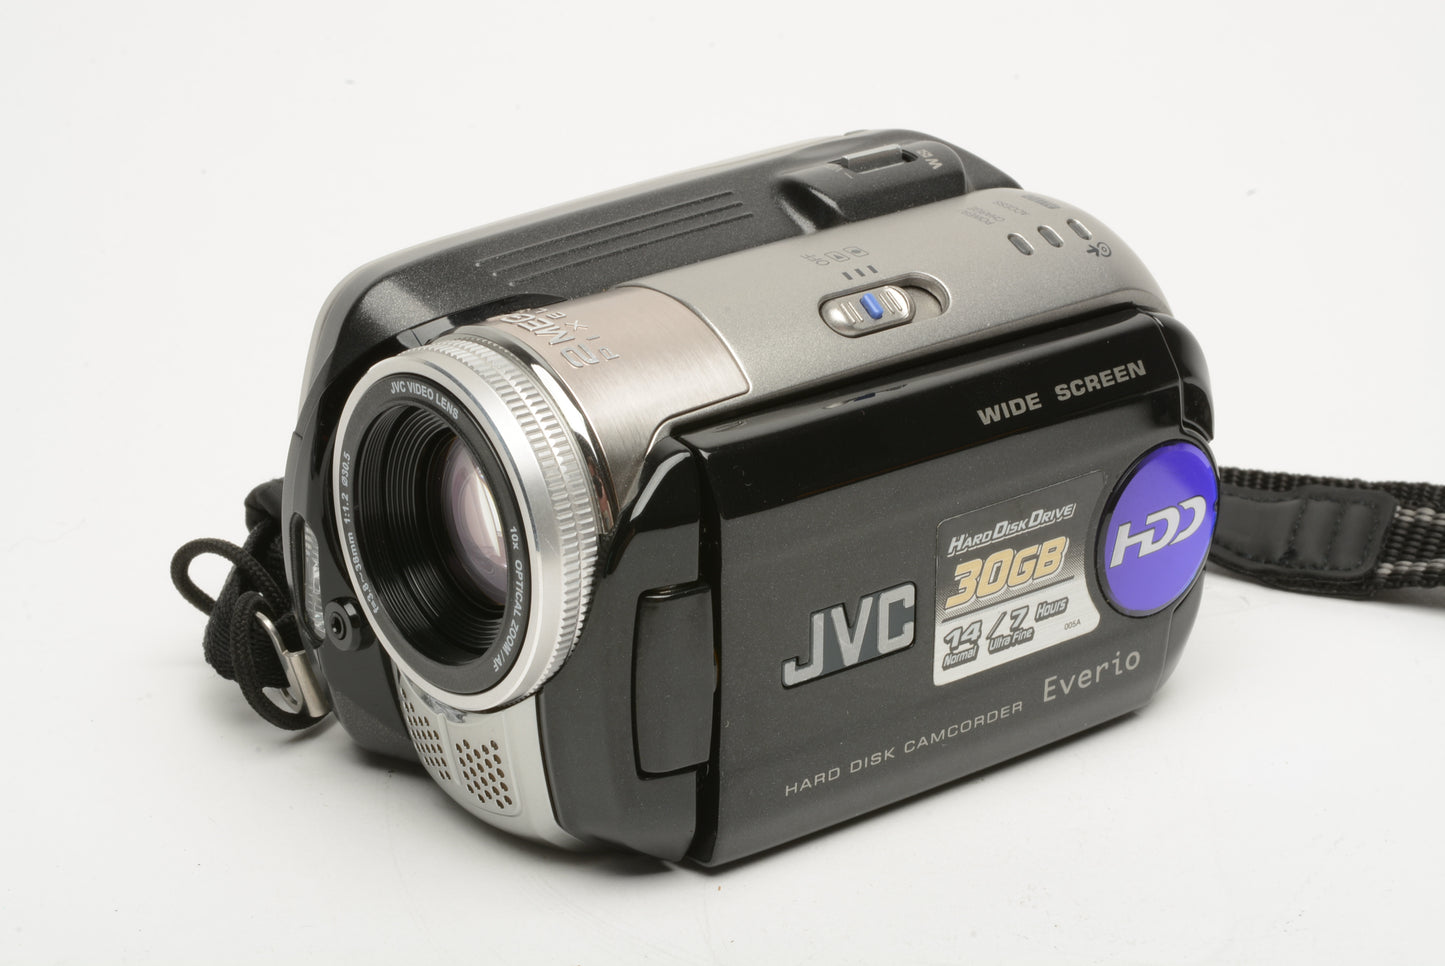 JVC Everio GZ-MG77U 30GB digital hard drive HDD Camcorder, batt+charger+manuals